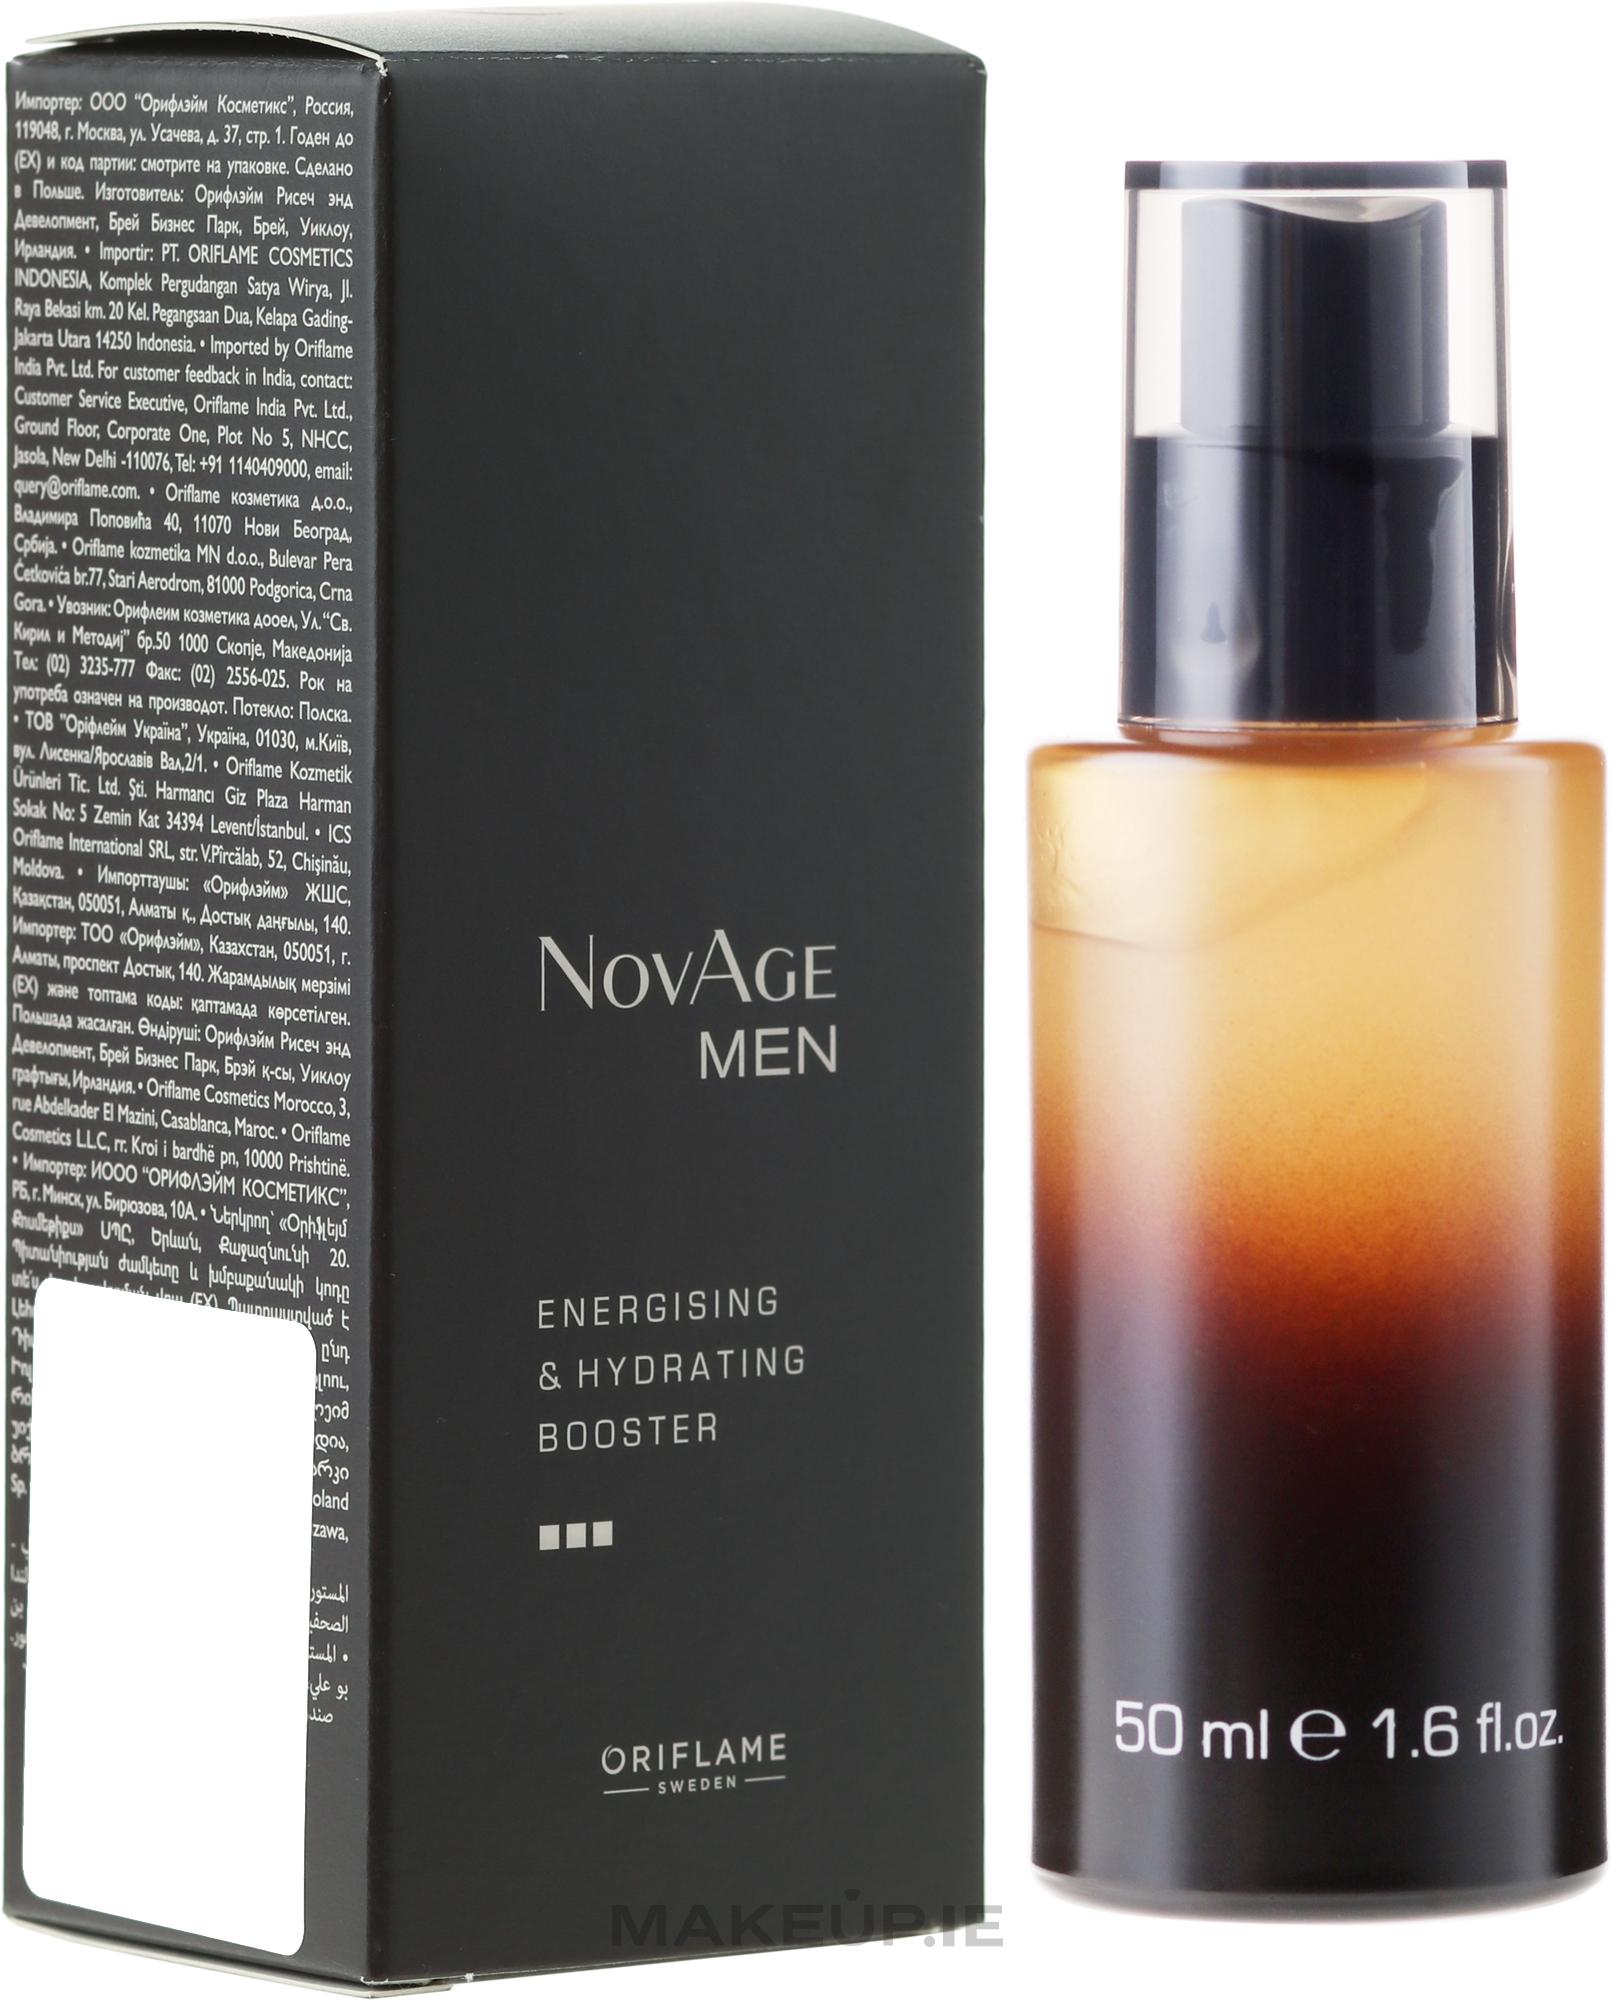 Moisturizing Energising Face Serum - Oriflame NovAge Men Energising & Hydrating Booster | Makeup.ie